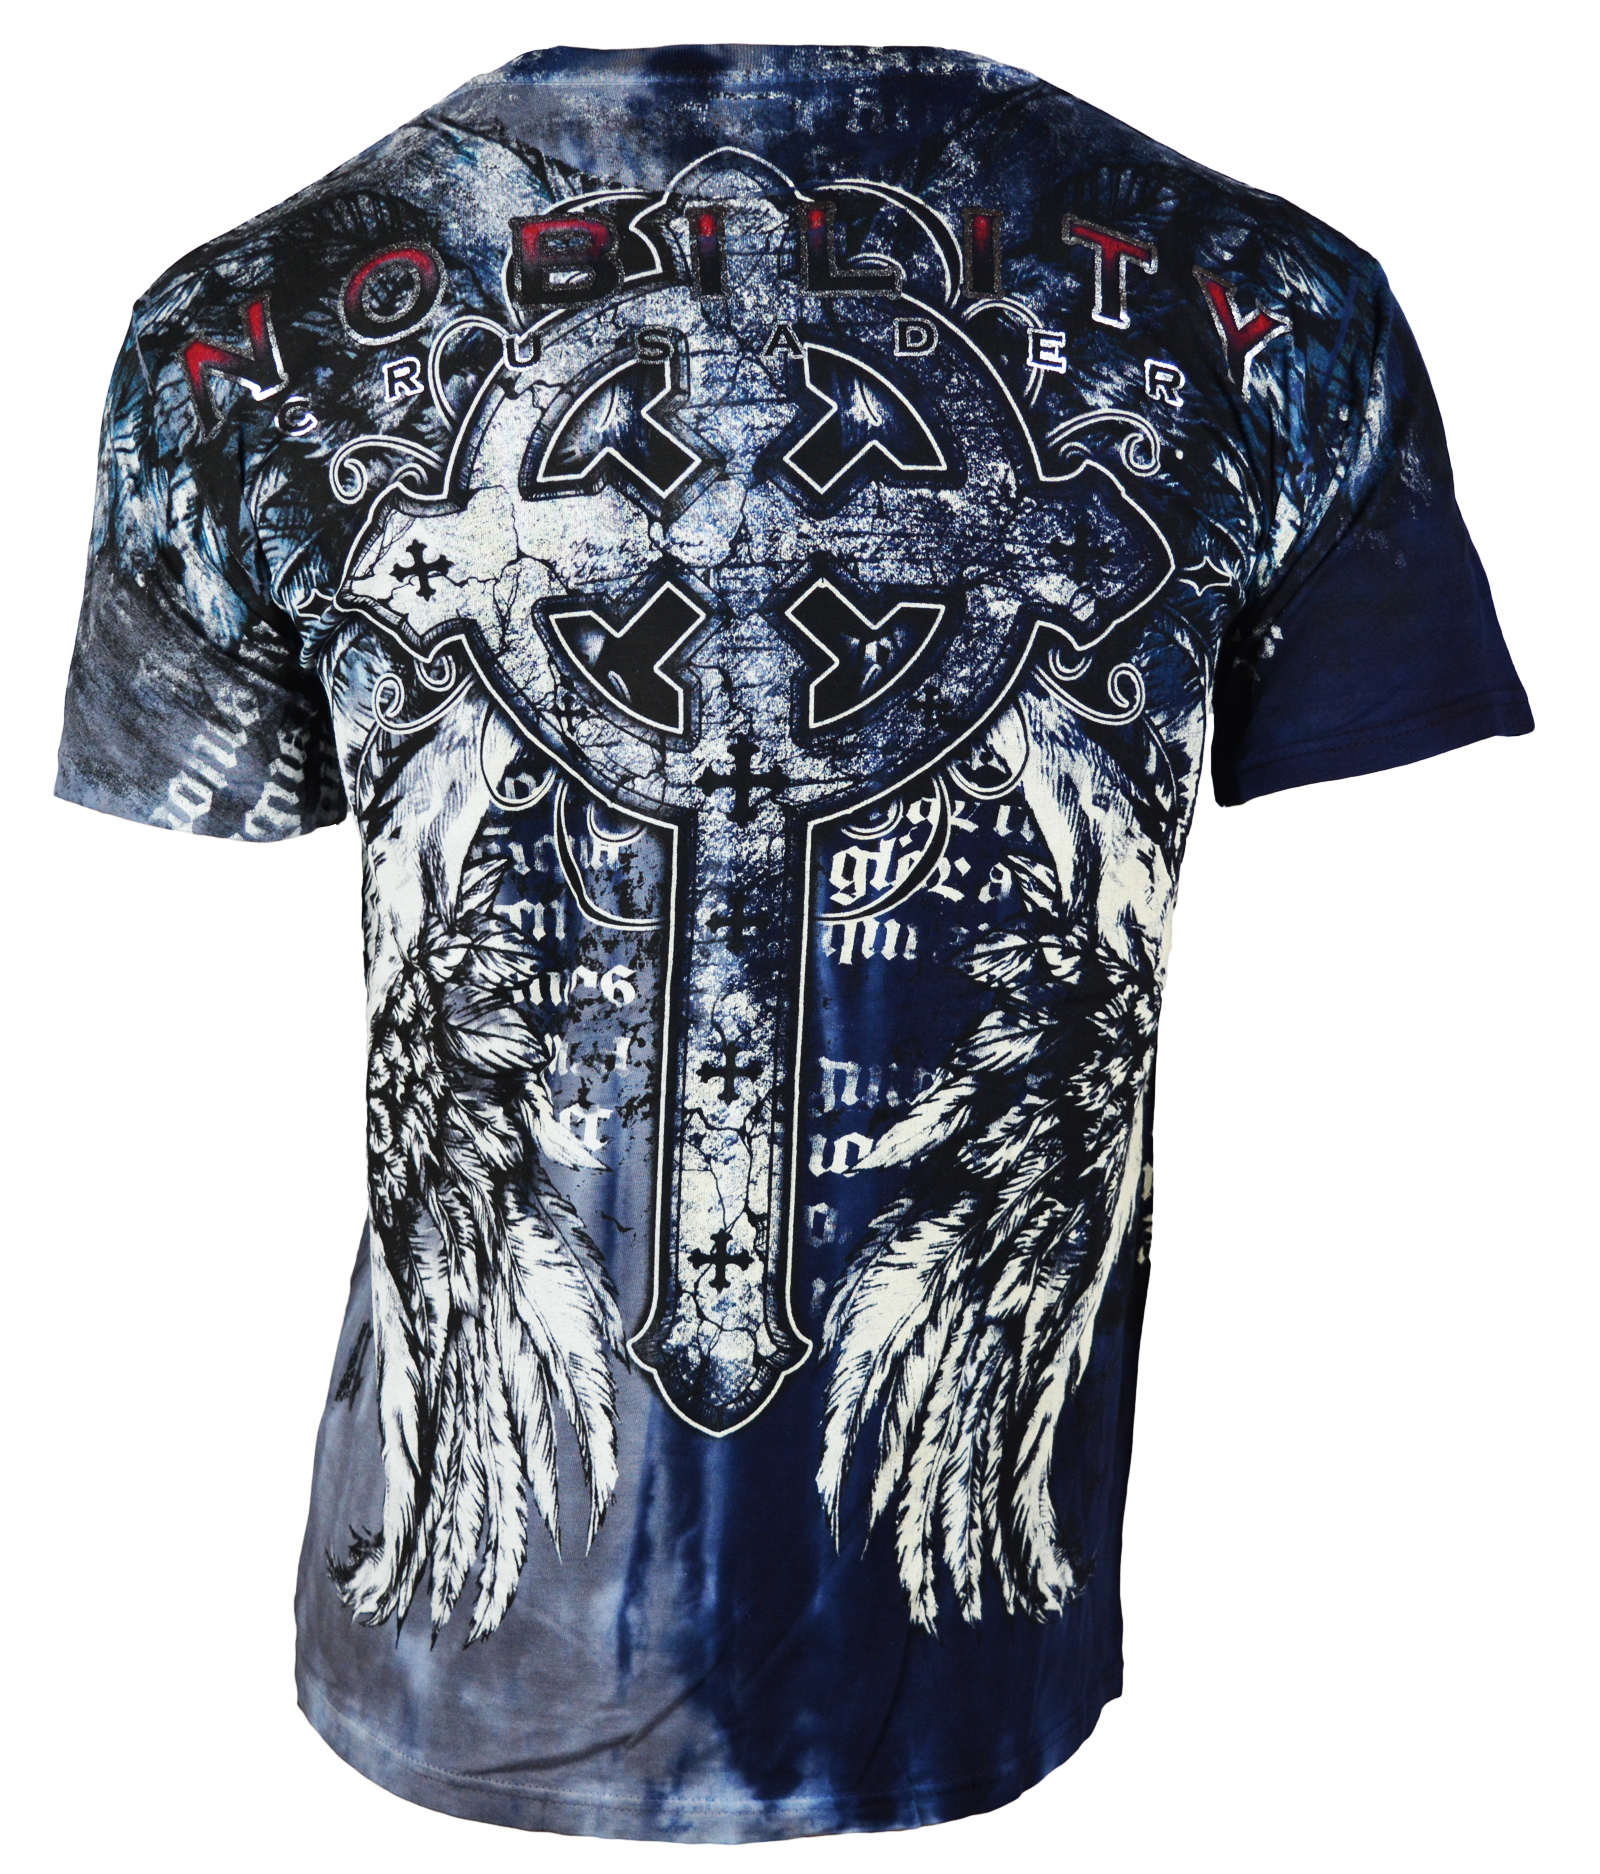 XZAVIER [Nobility Cross] T-Shirt MMA UFC Biker Harley Rocker Gothic ...